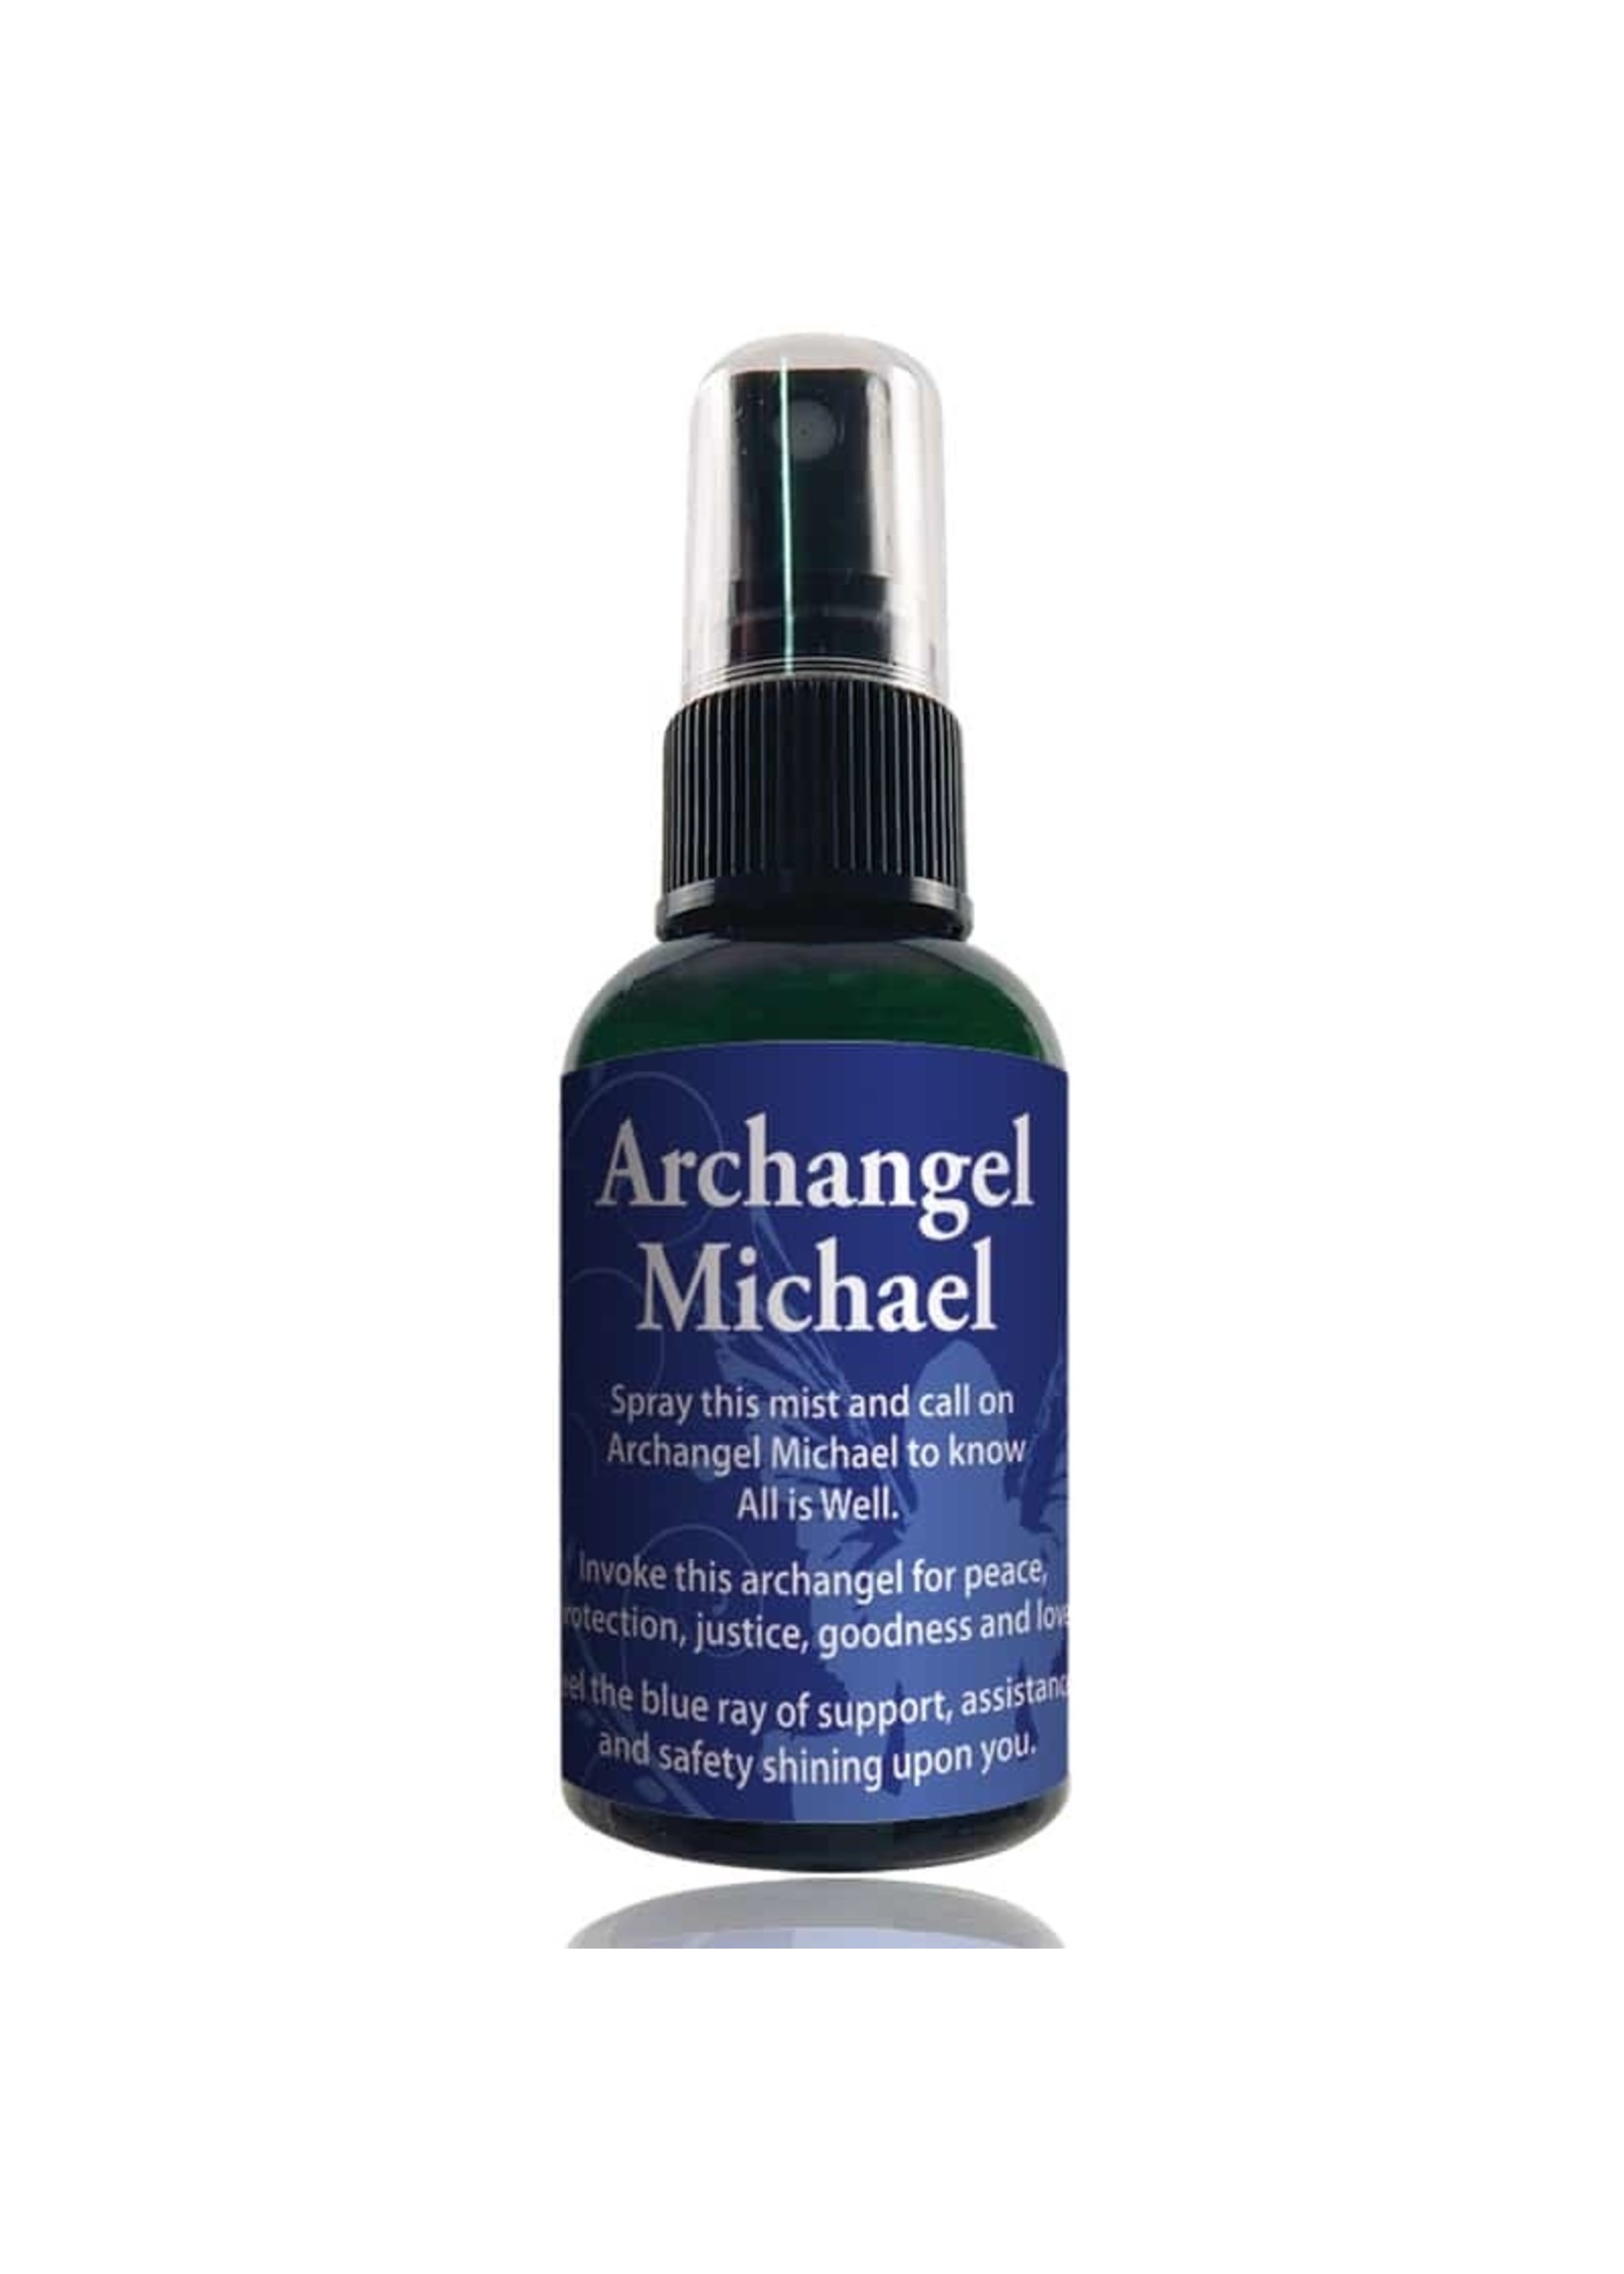 Crystal Garden Archangel Michael Spray